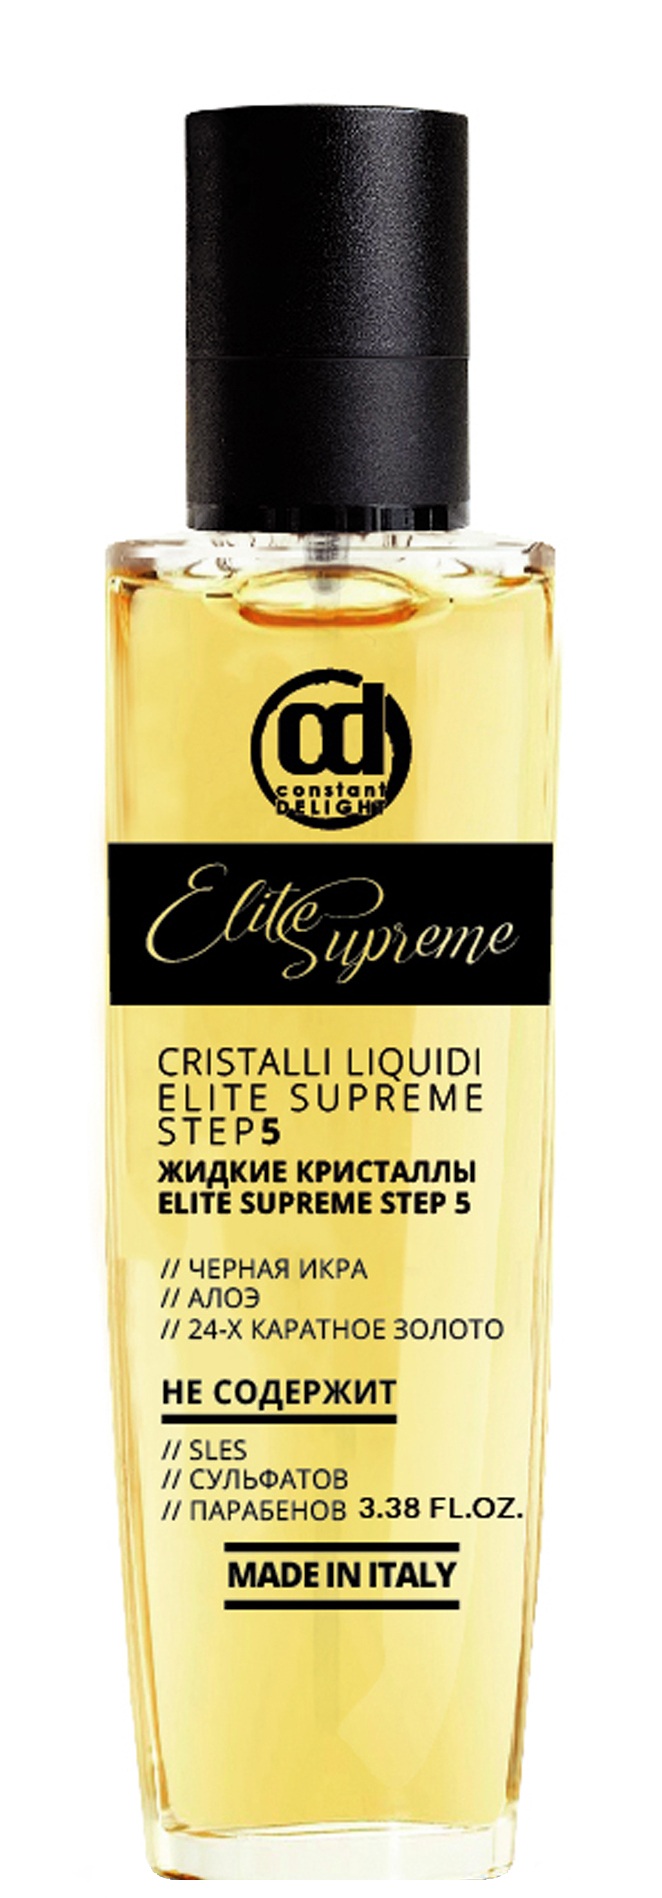 Масло для волос жидкие. Жидкие Кристаллы Elite Supreme step5. Масло для волос CD Elite Supreme Cristalle Fluid. Жидкие Кристаллы constant Delight Elite Supreme Step 5 100 мл. Констант Делайт Кристаллы для волос.